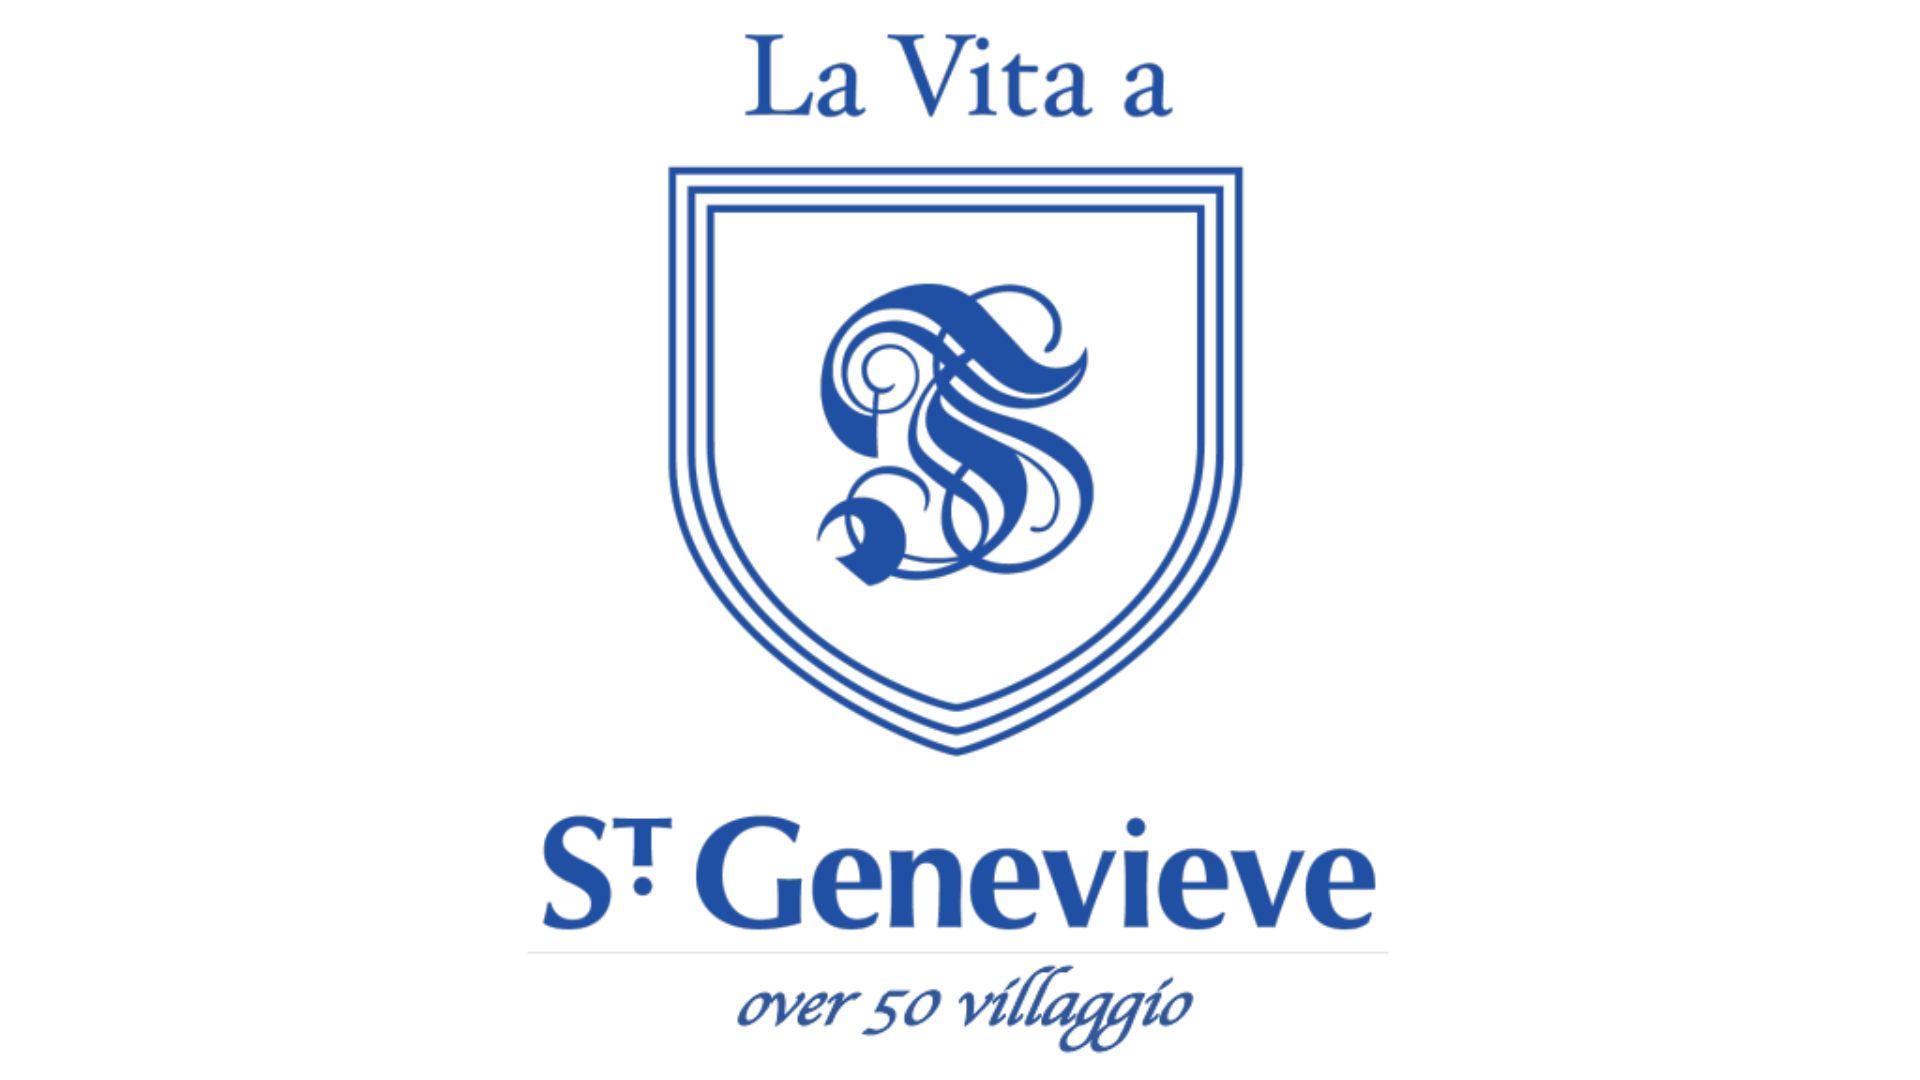 La Vita a St. Genevieve